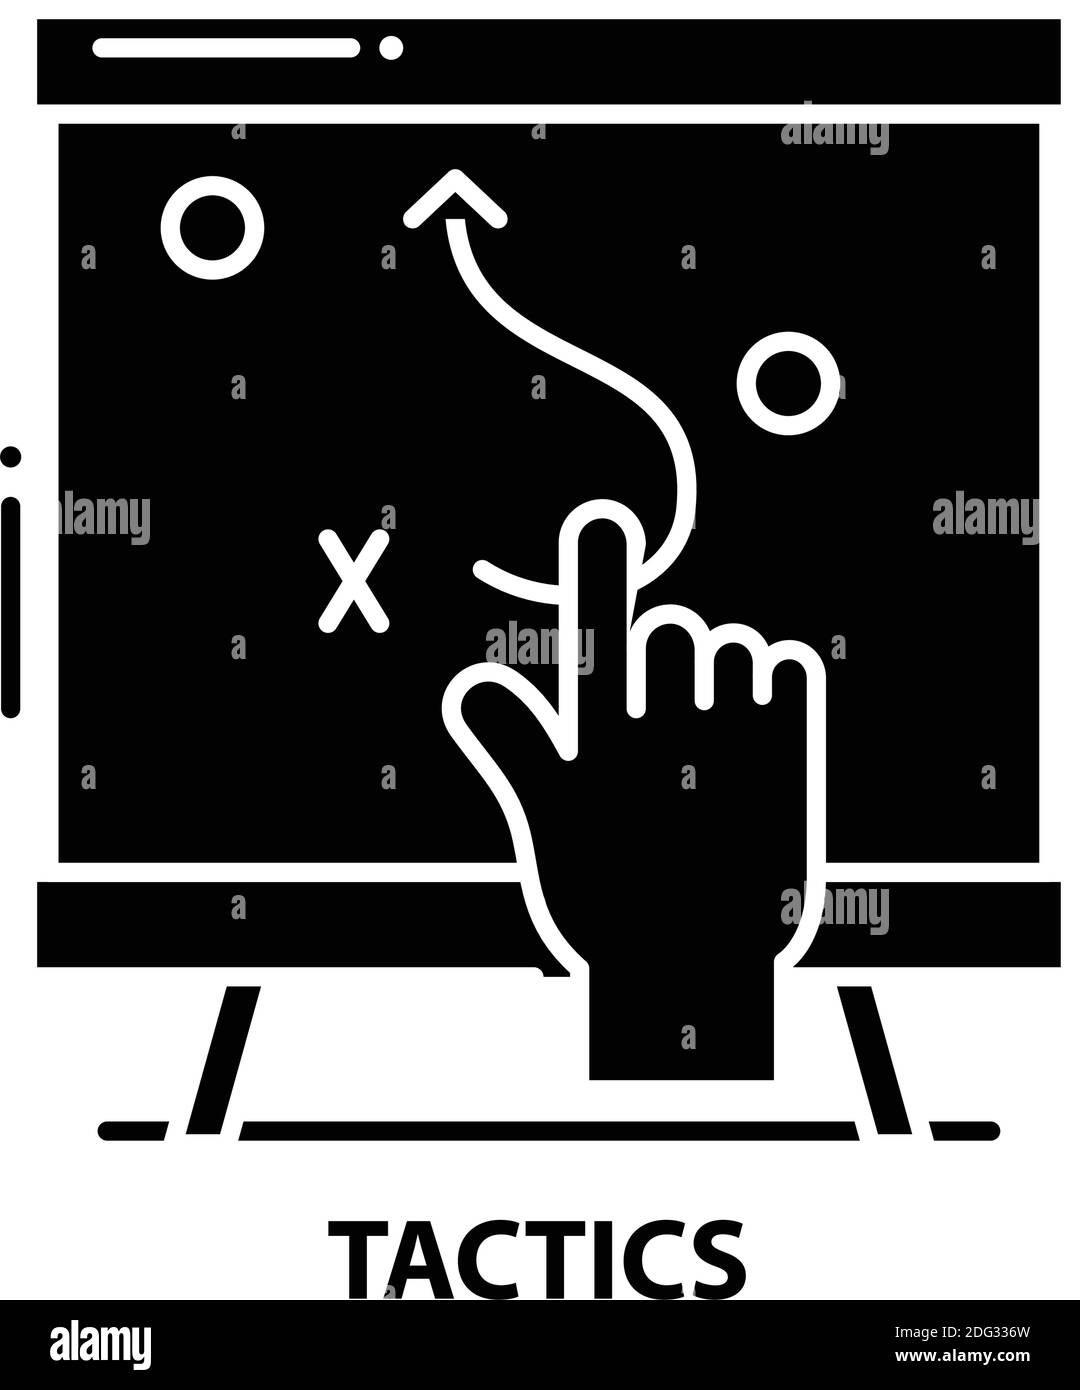 tactics symbol icon, black vector sign with editable strokes, concept illustration Stock Vector